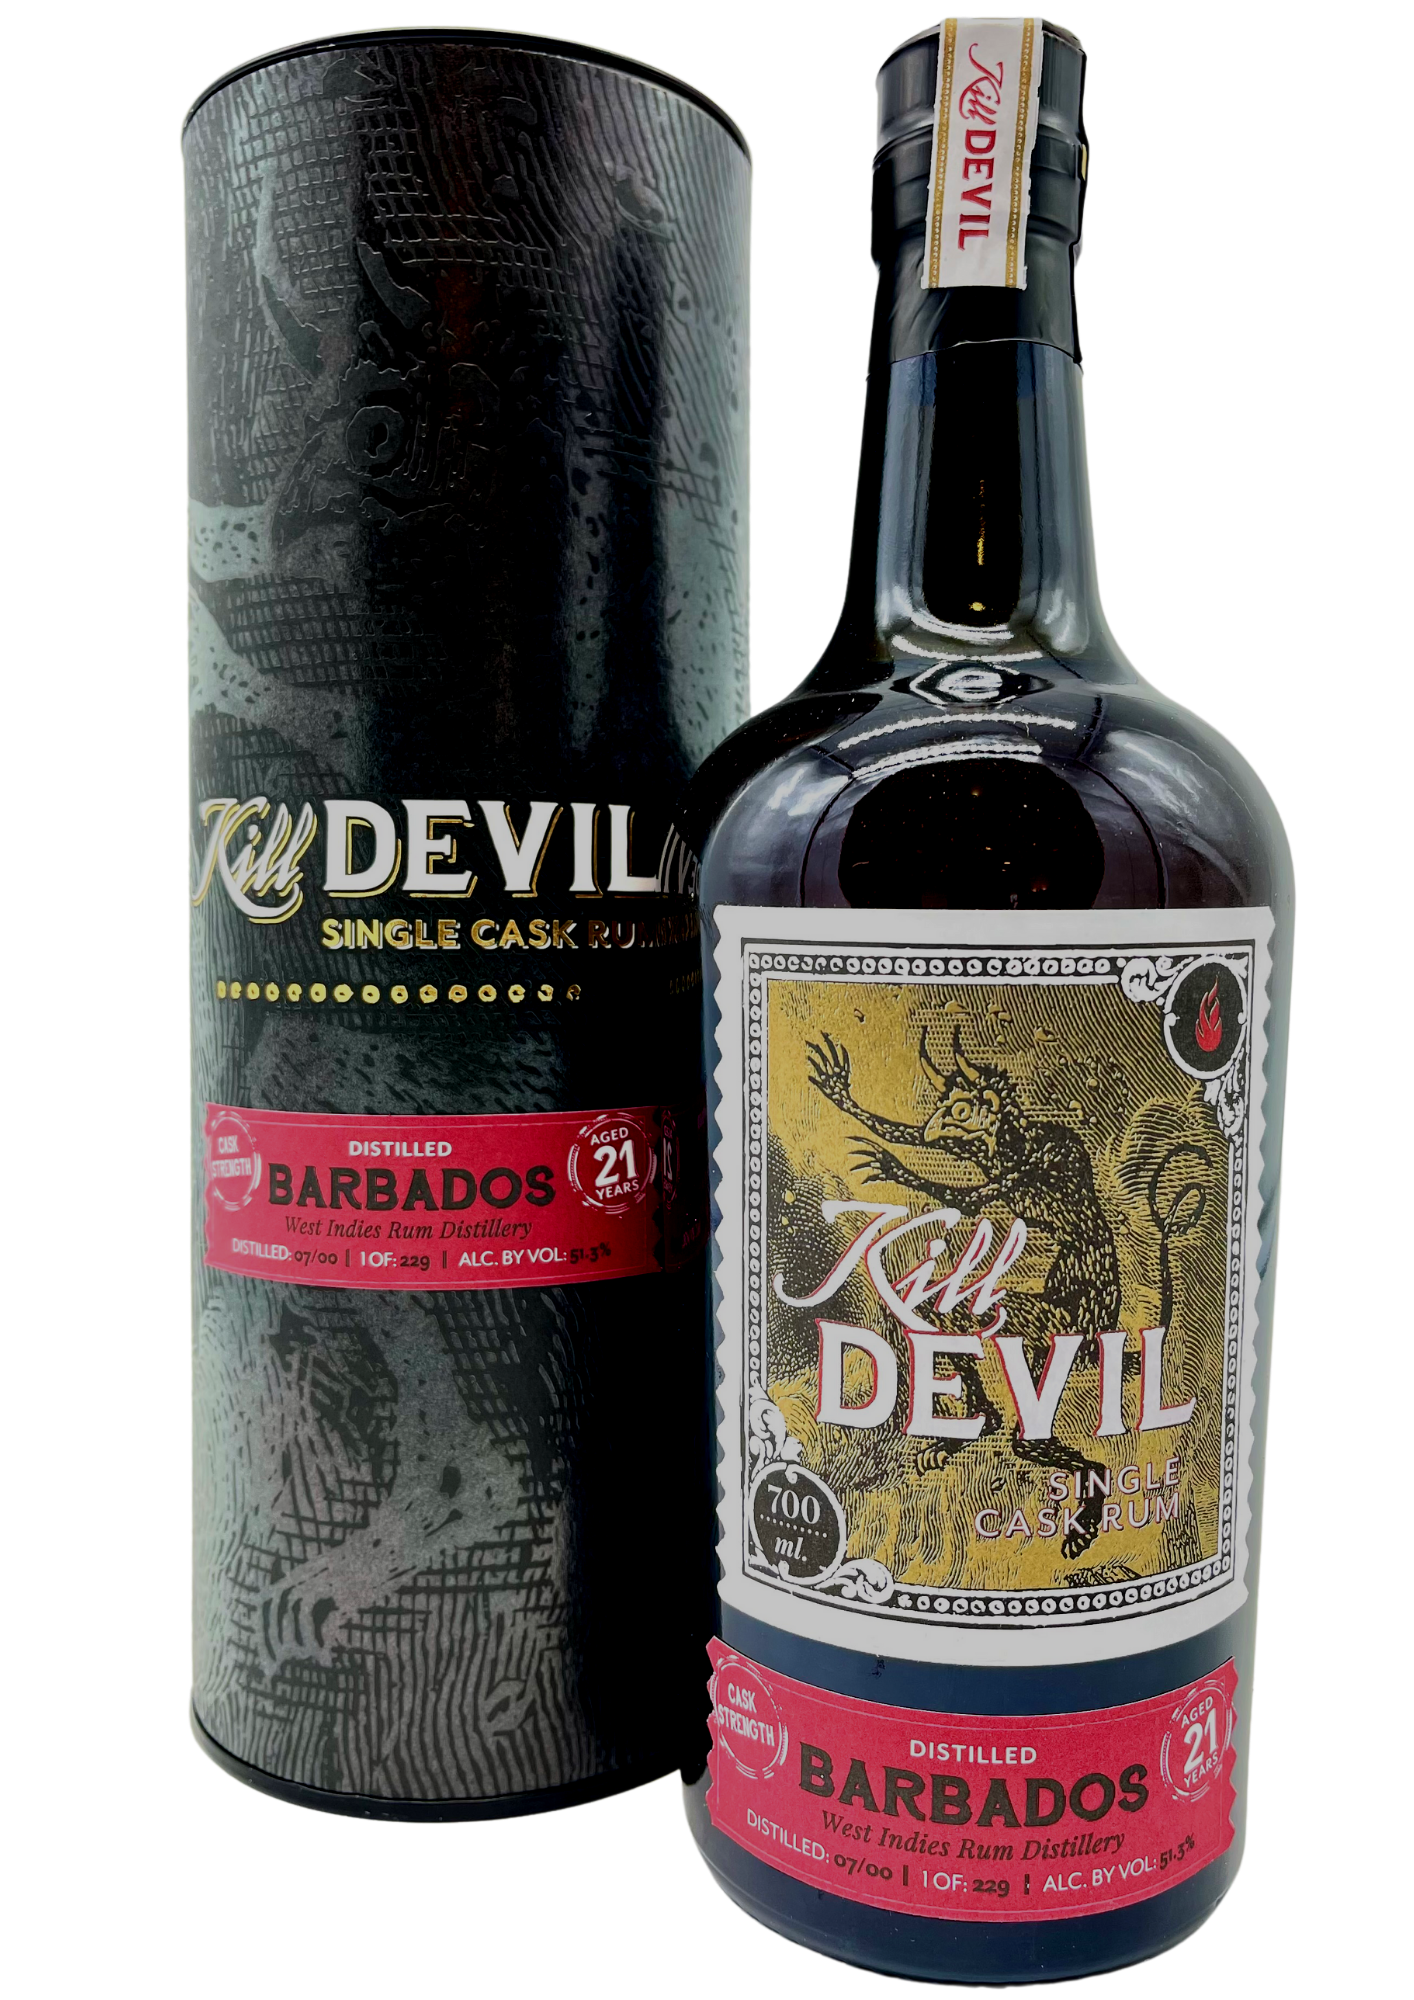 KILL DEVIL Barbados 21 ans West Indies Rum Distillery 51.3%